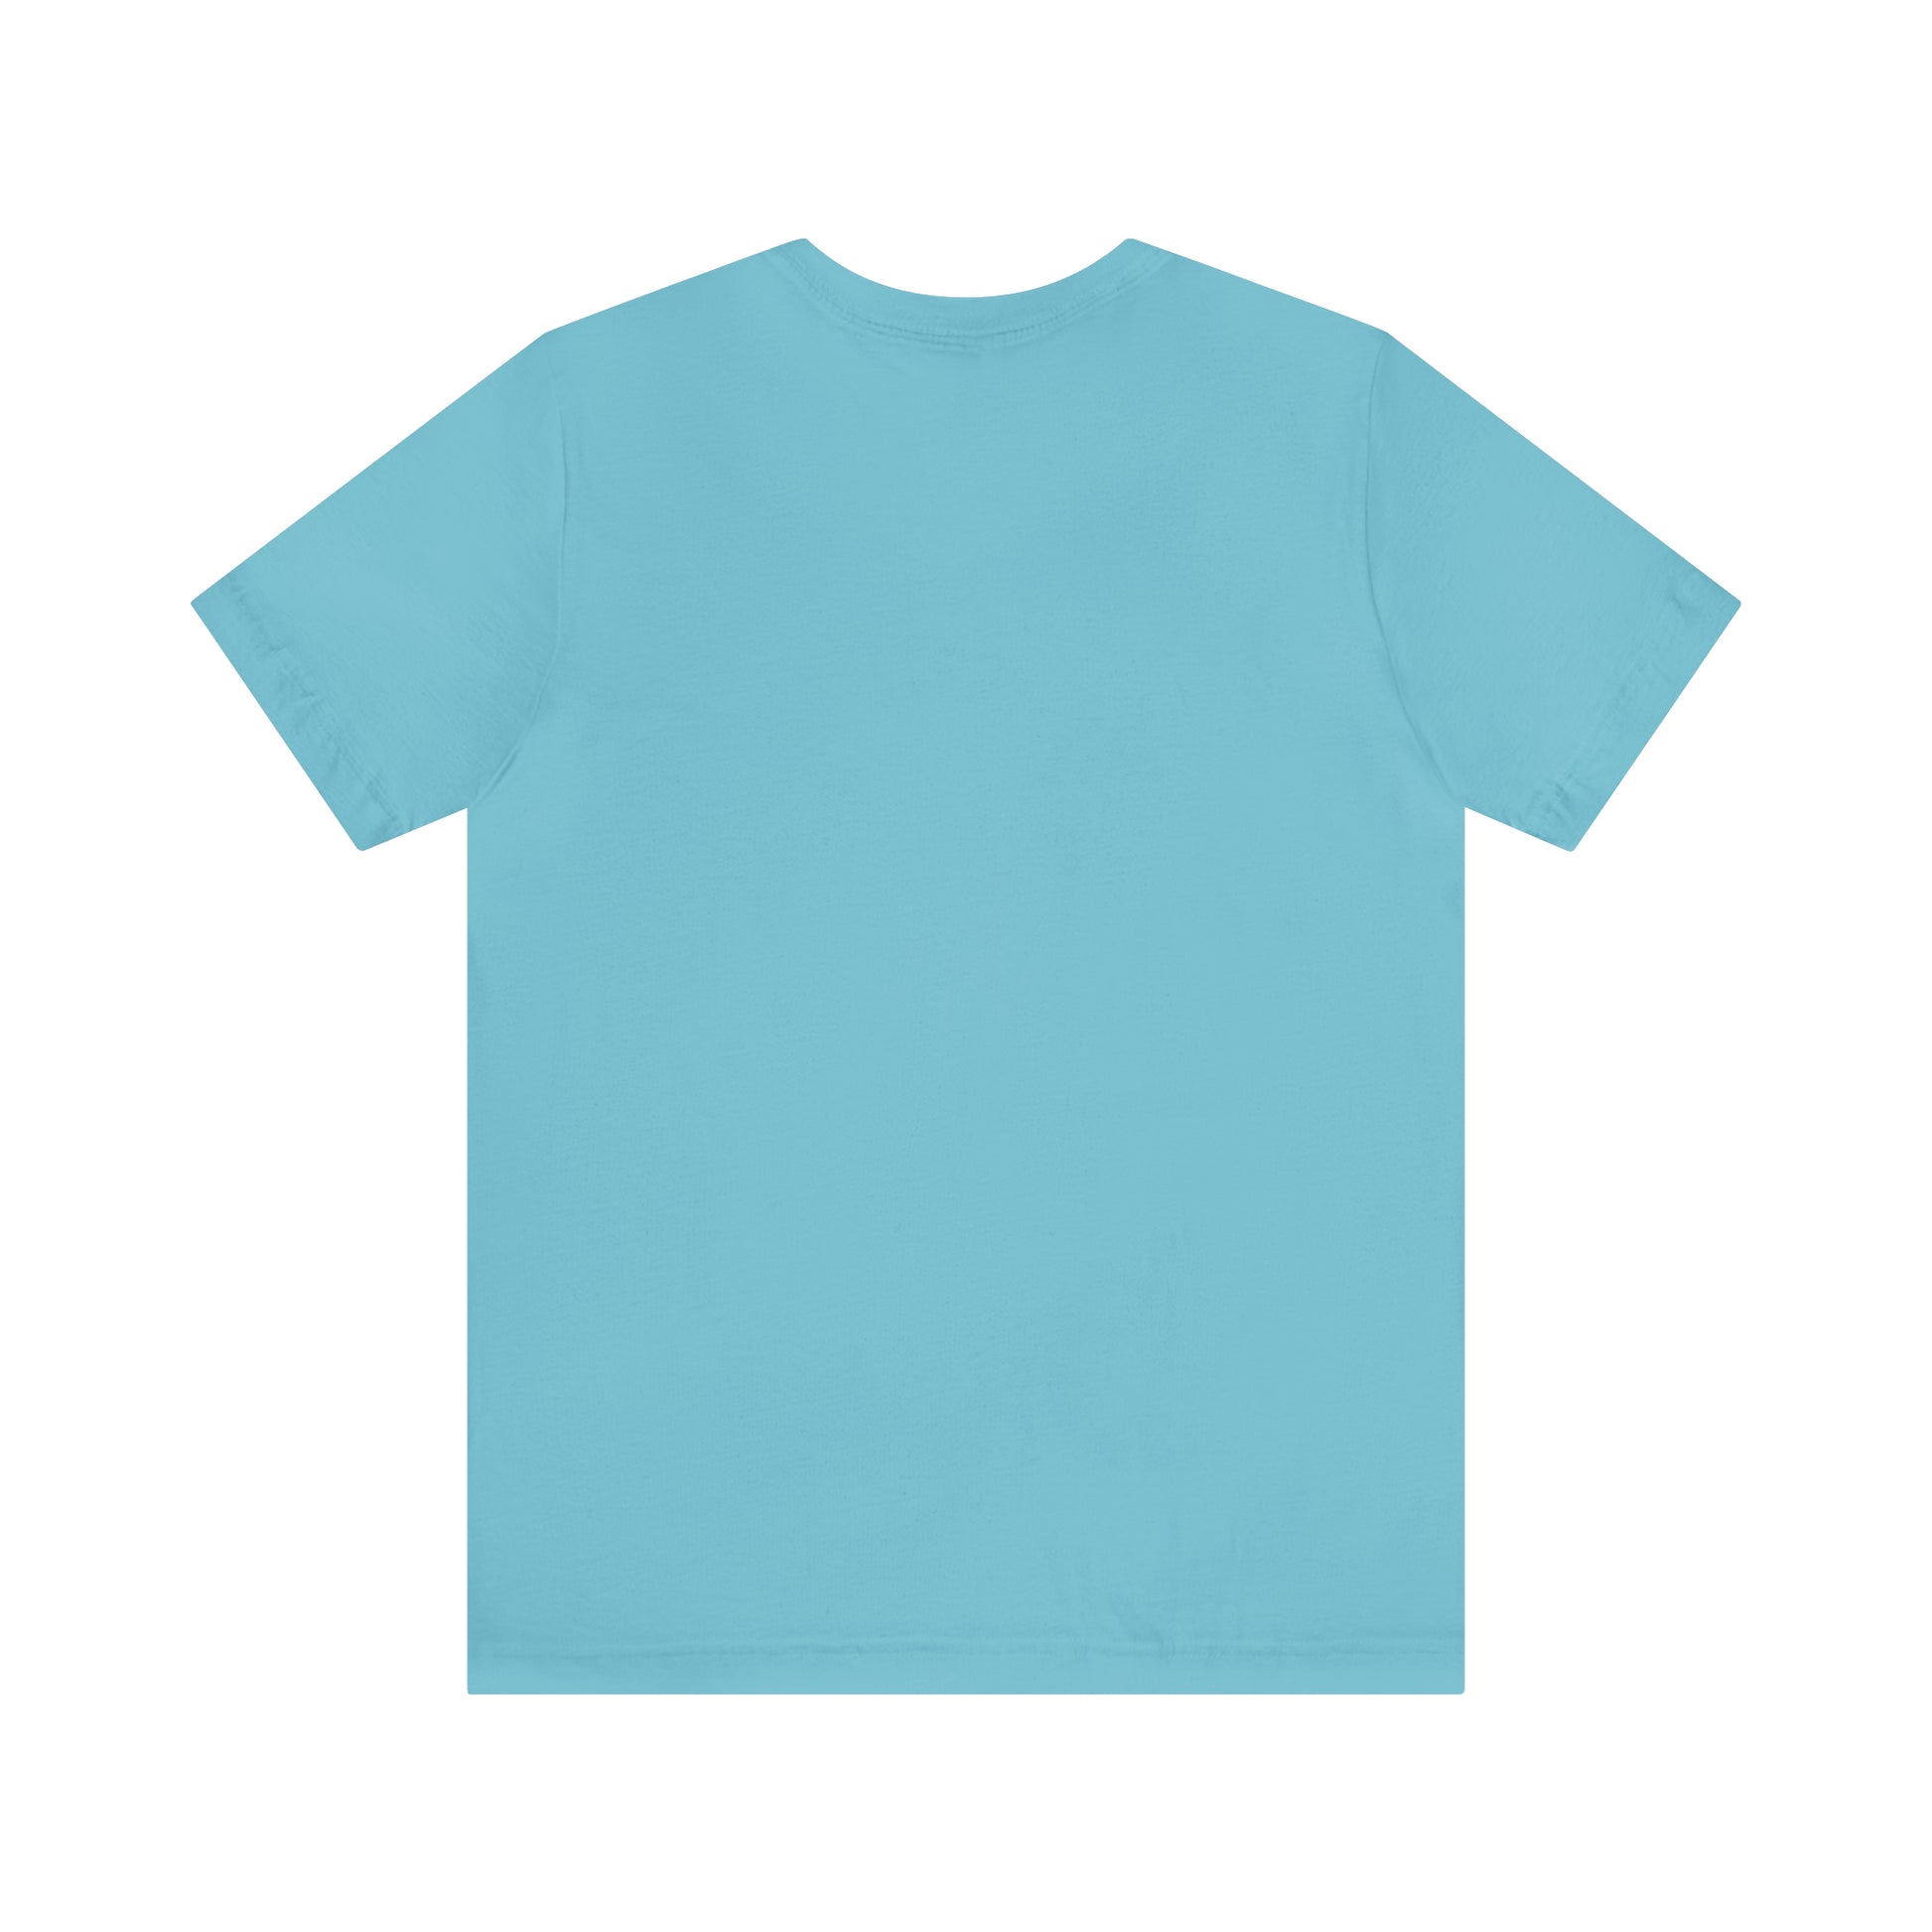 Roseburg Receiver fan - Unisex Short Sleeve Tee - CrazyTomTShirts